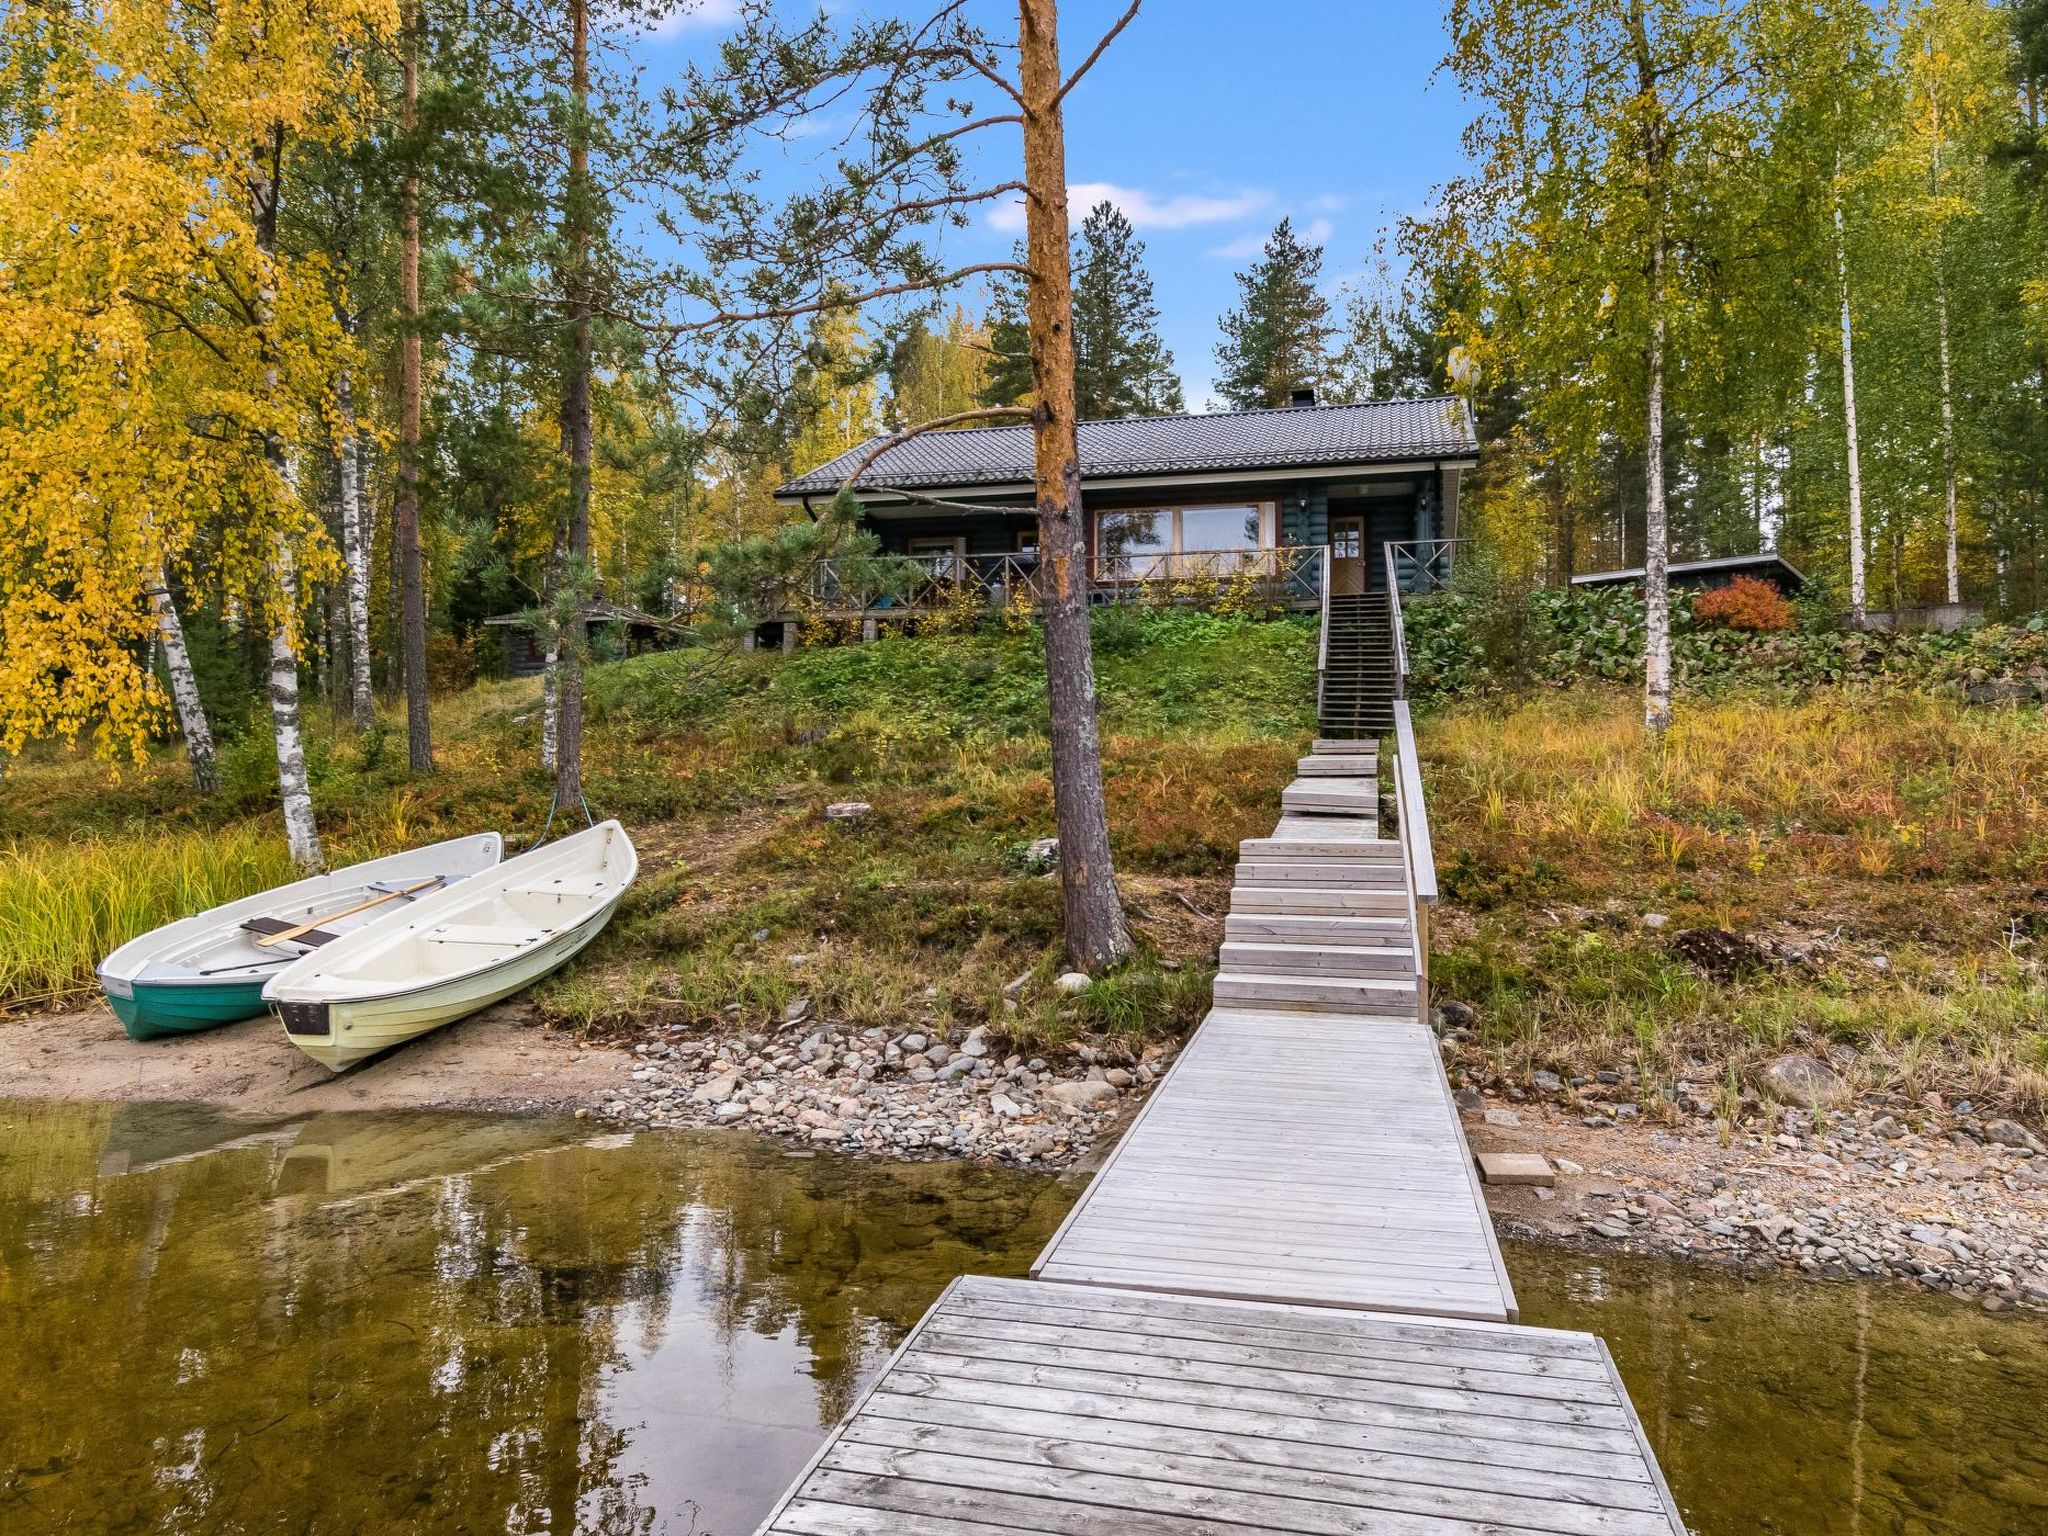 Photo 2 - 4 bedroom House in Mikkeli with sauna